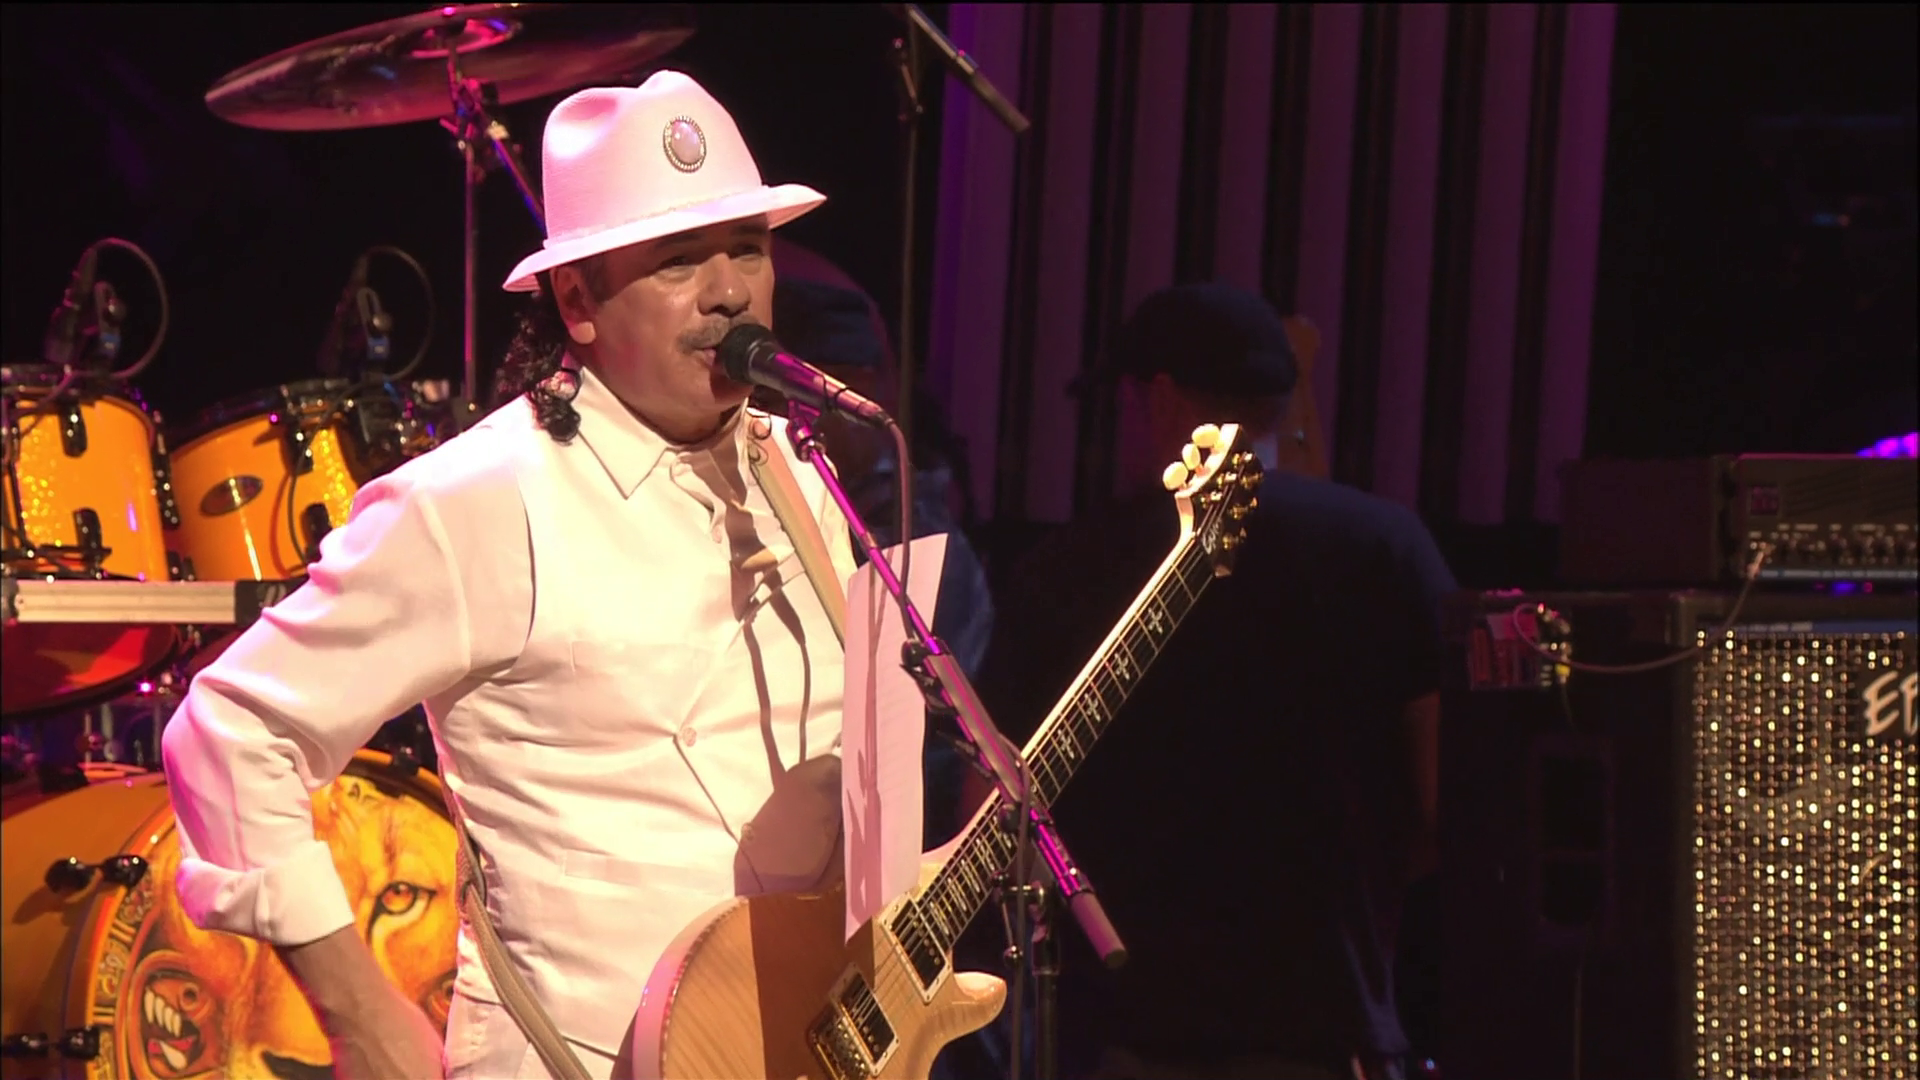 Santana.McLaughlin.Live.at.Montreux.2011.LPCM.2.0.mkv_20160317_162736.780.png